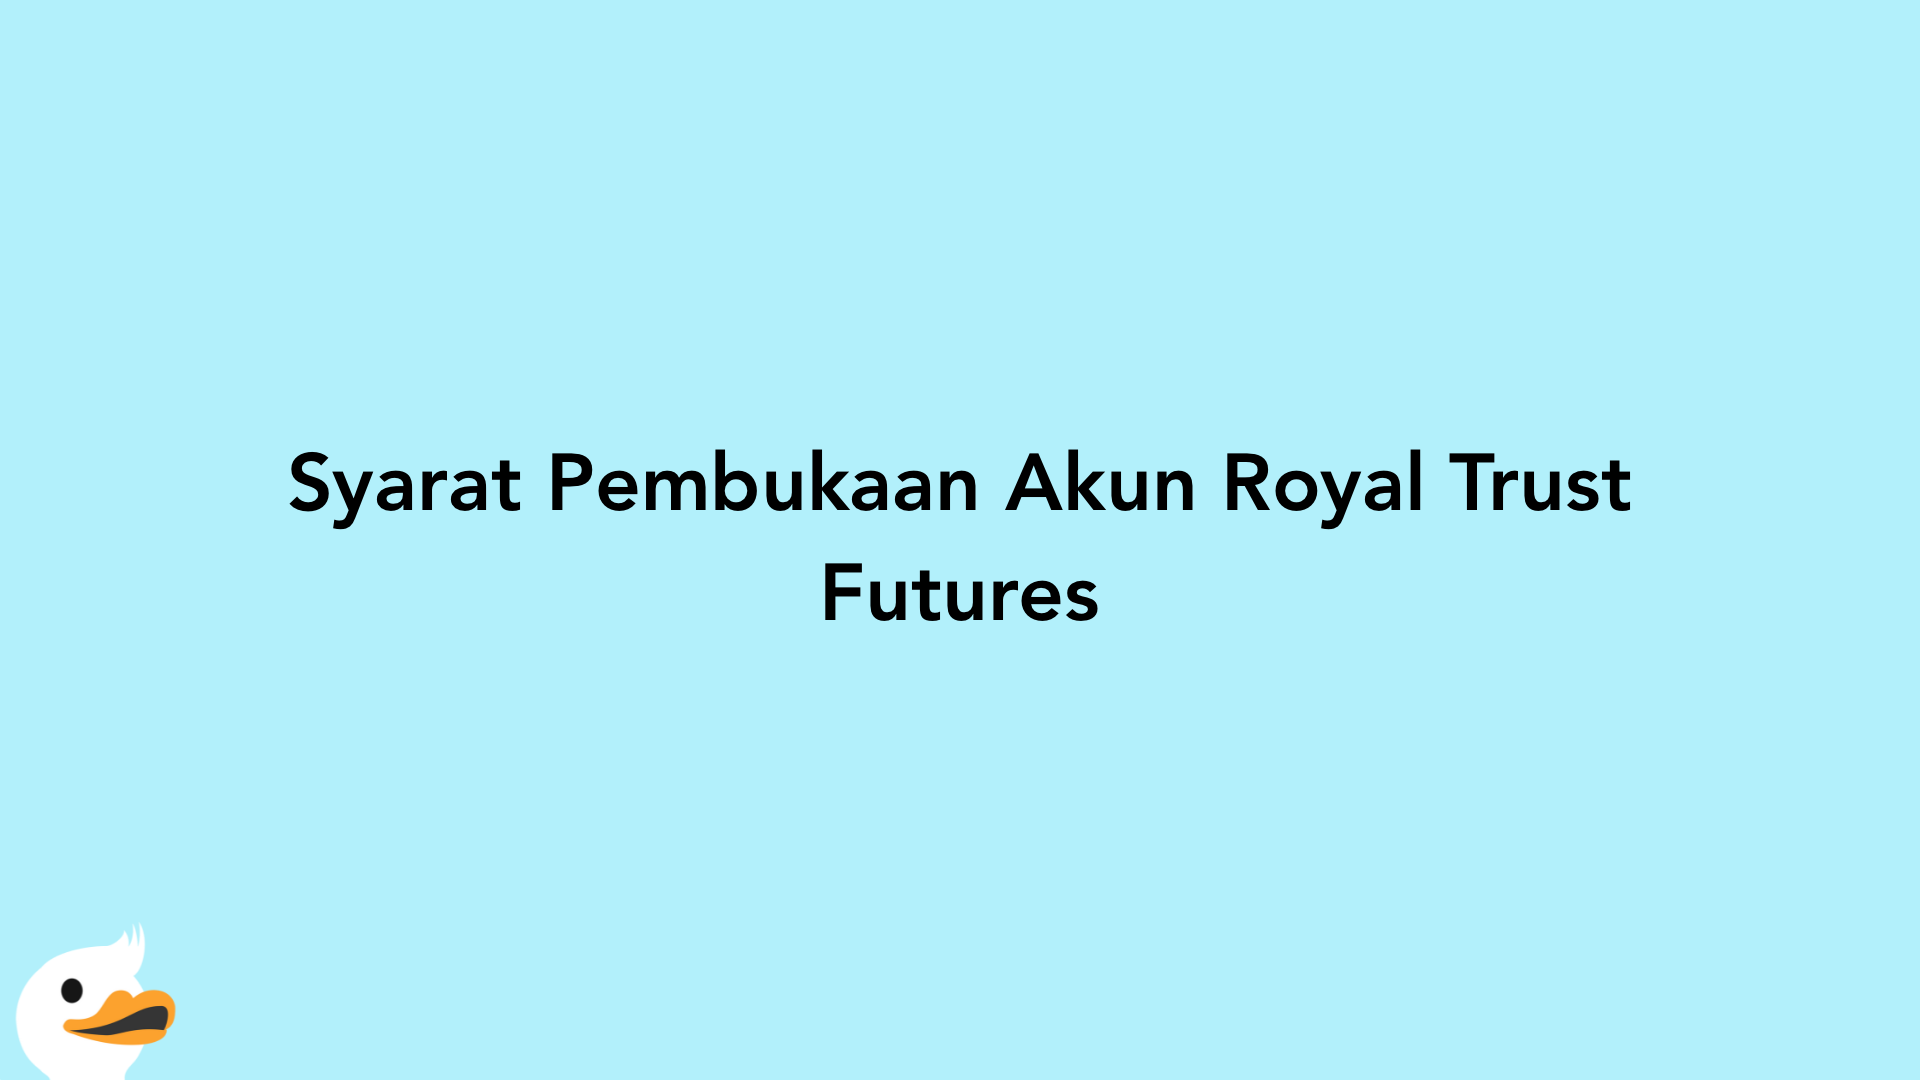 Syarat Pembukaan Akun Royal Trust Futures